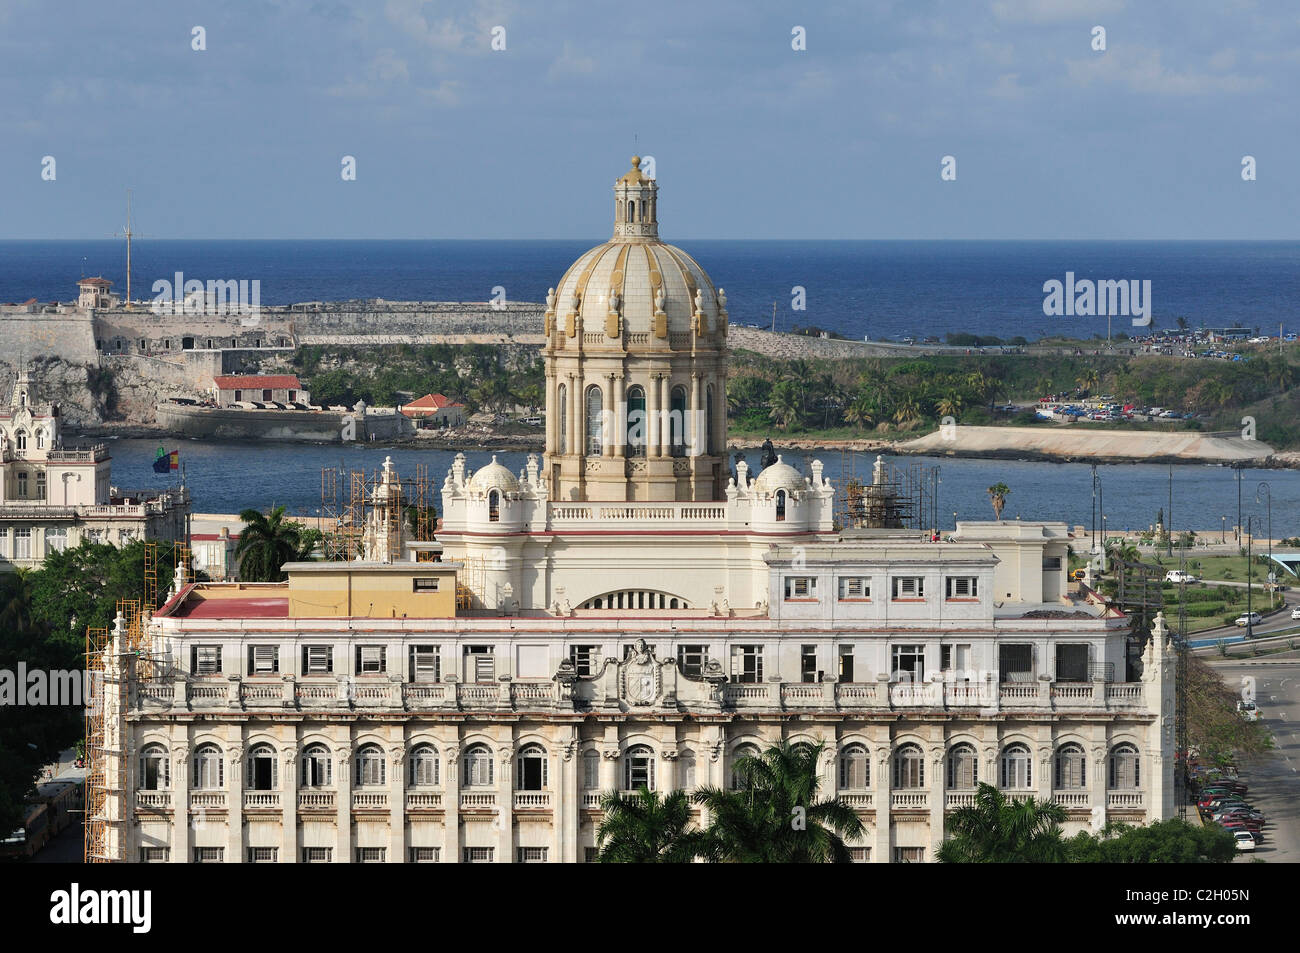 La Havane. Cuba. Le Palacio Presidencial qui abrite aujourd'hui le Musée de la révolution / Museo de la Revolucion. Banque D'Images